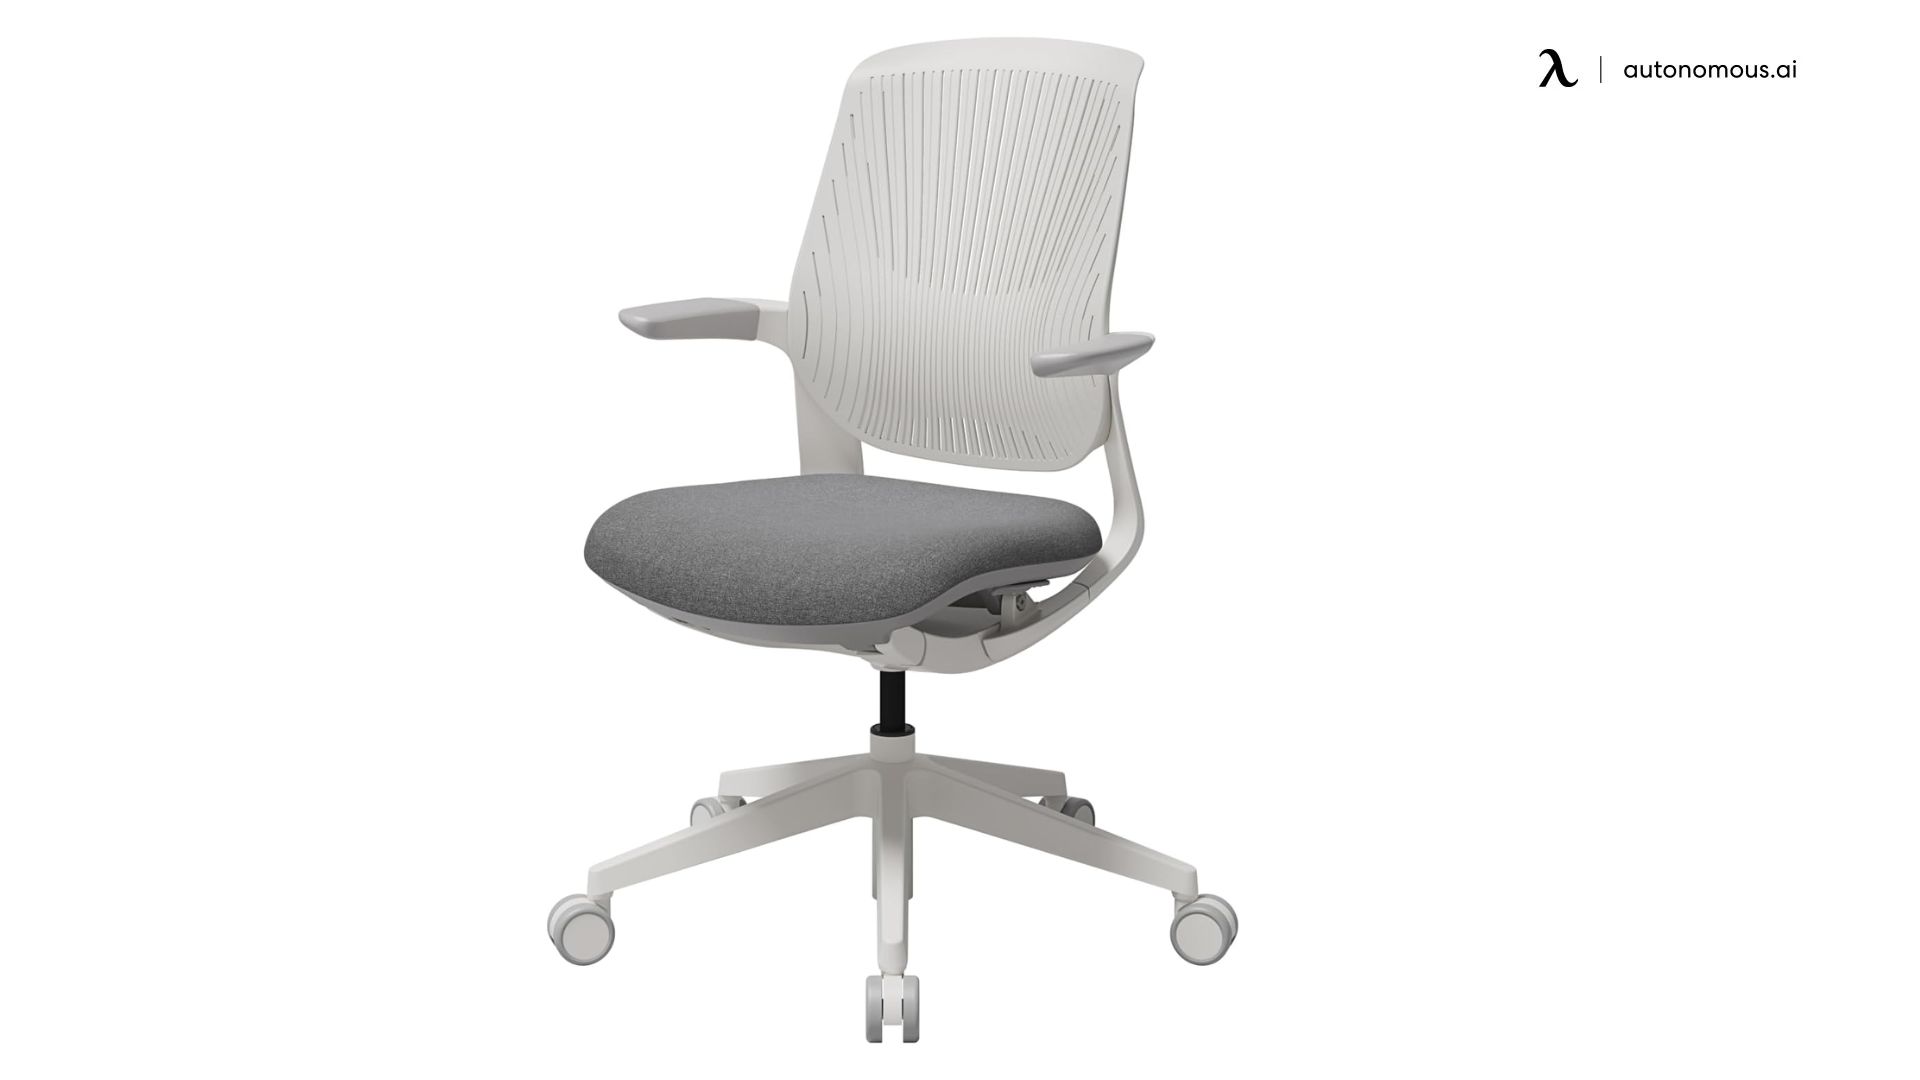 SIDIZ T25 Petite Ergonomic Office Chair